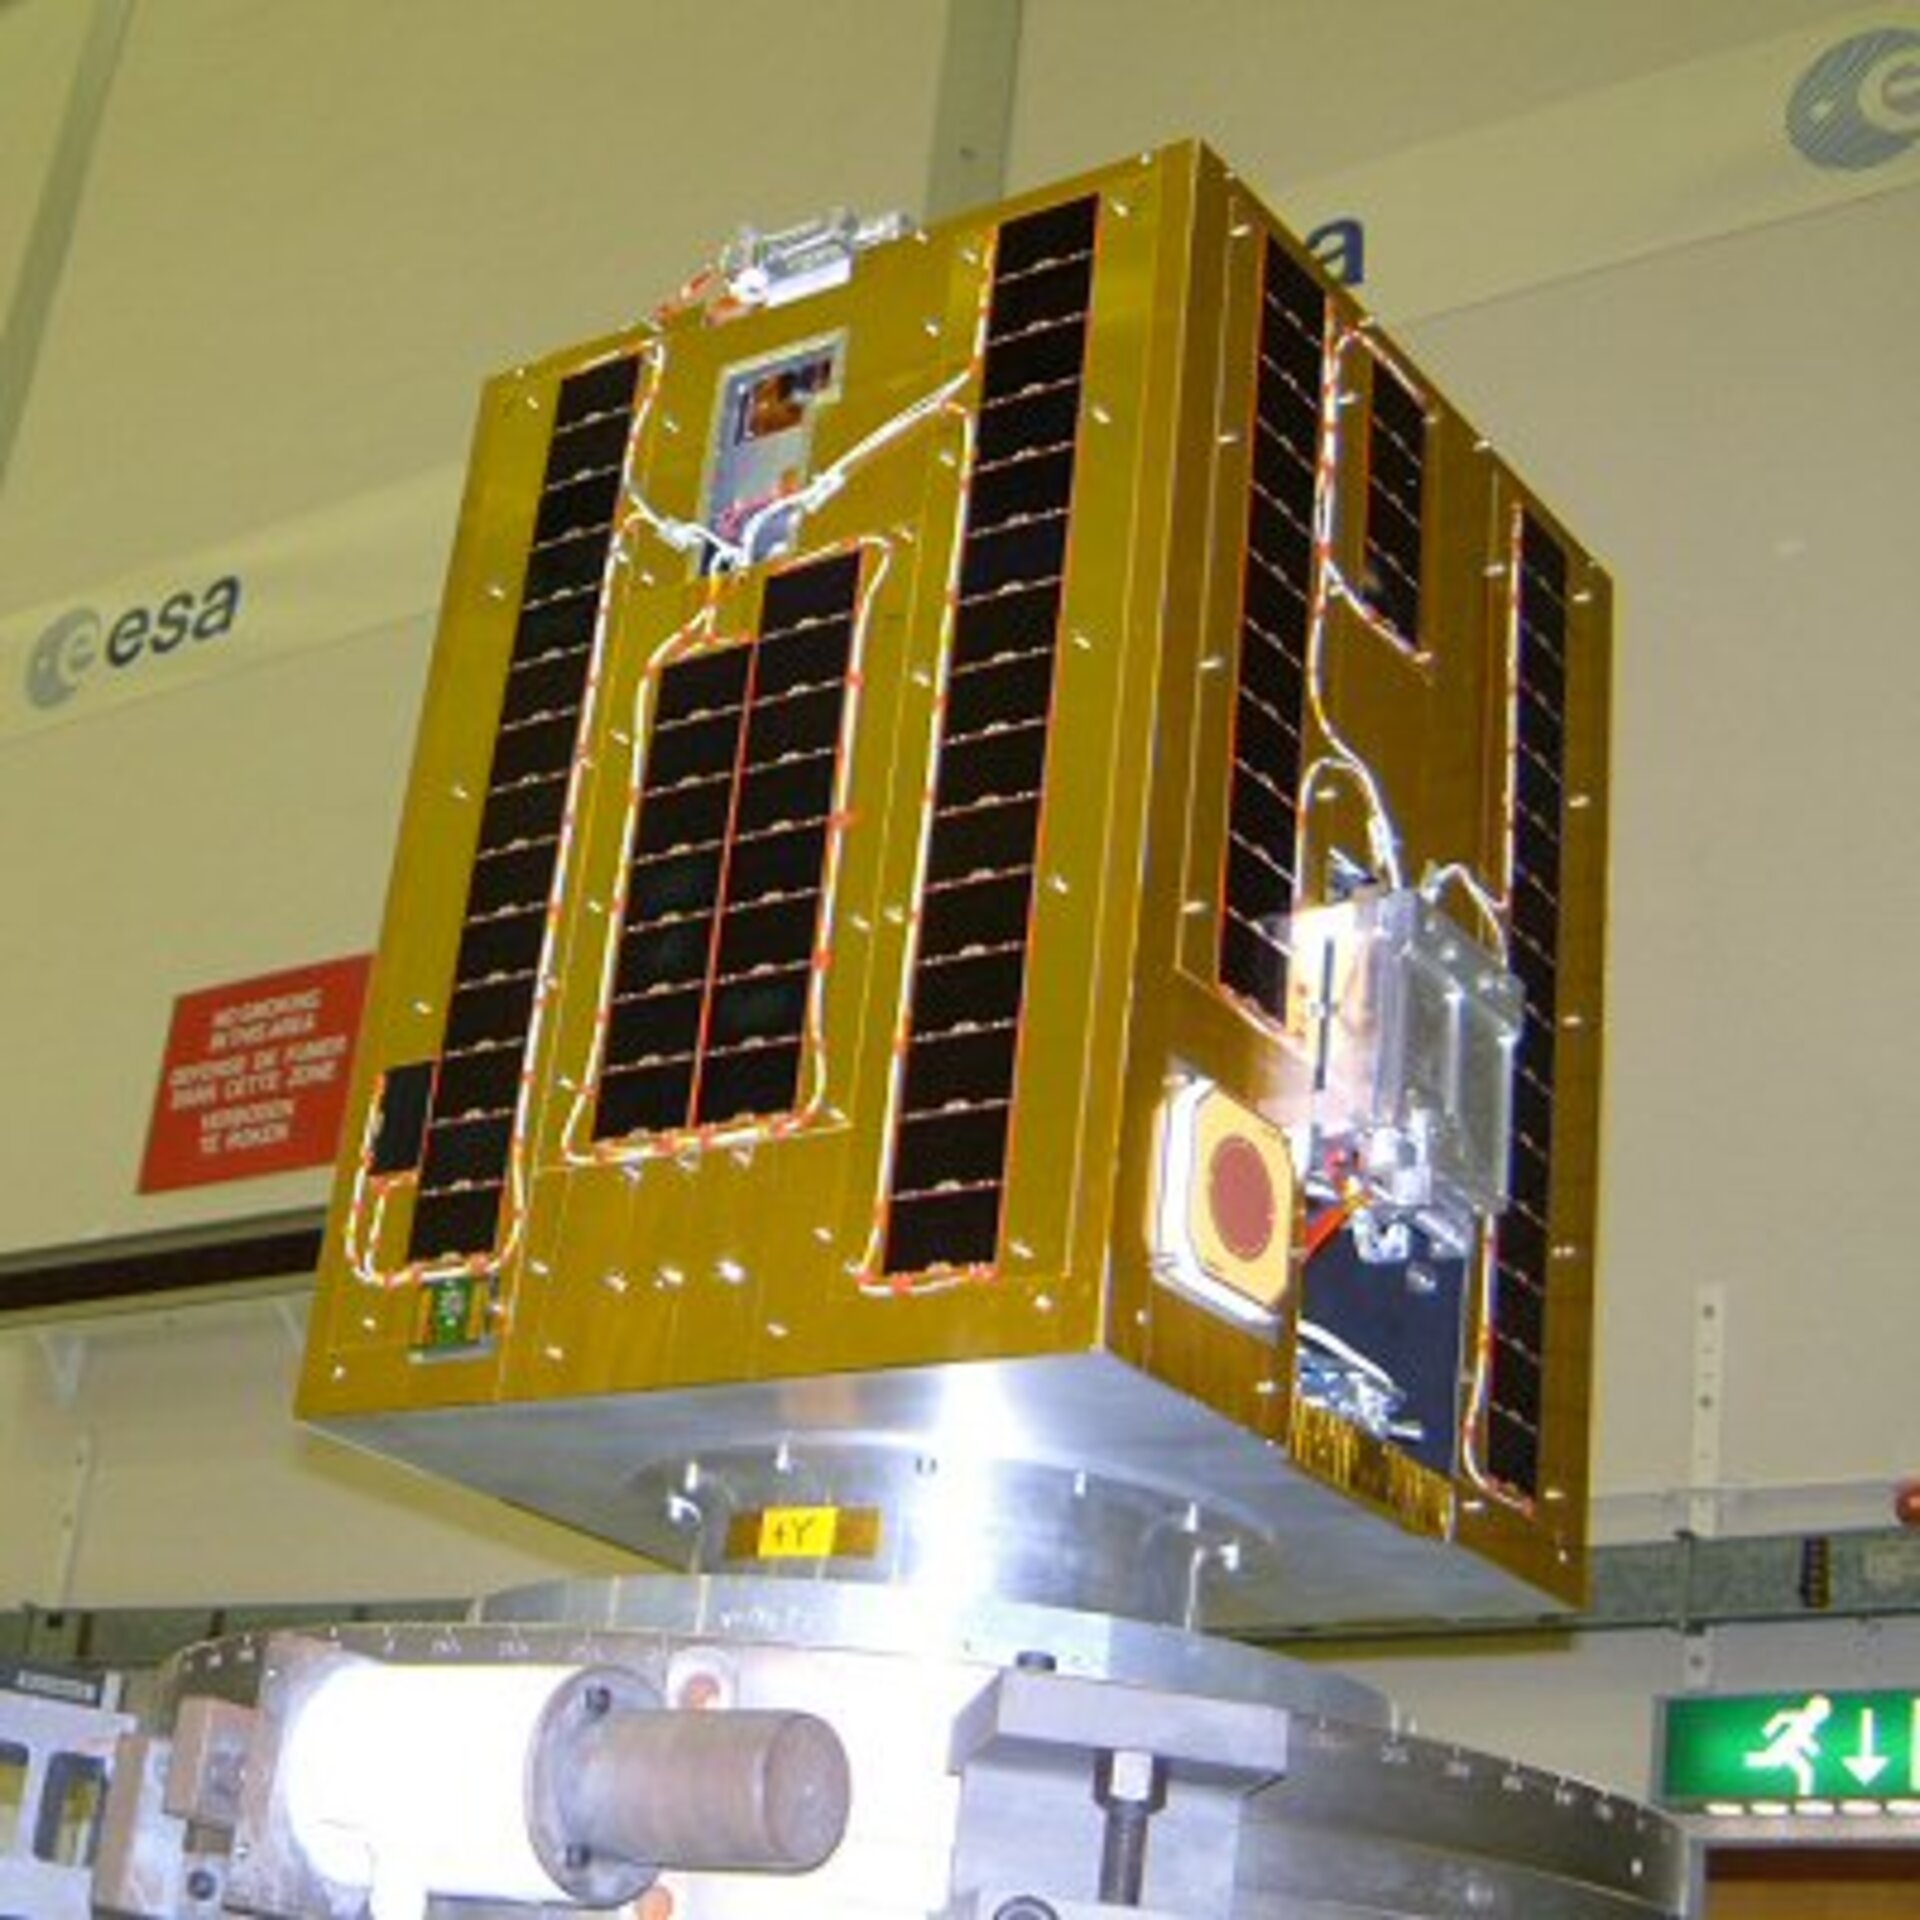 The SSETI Express Cubesat